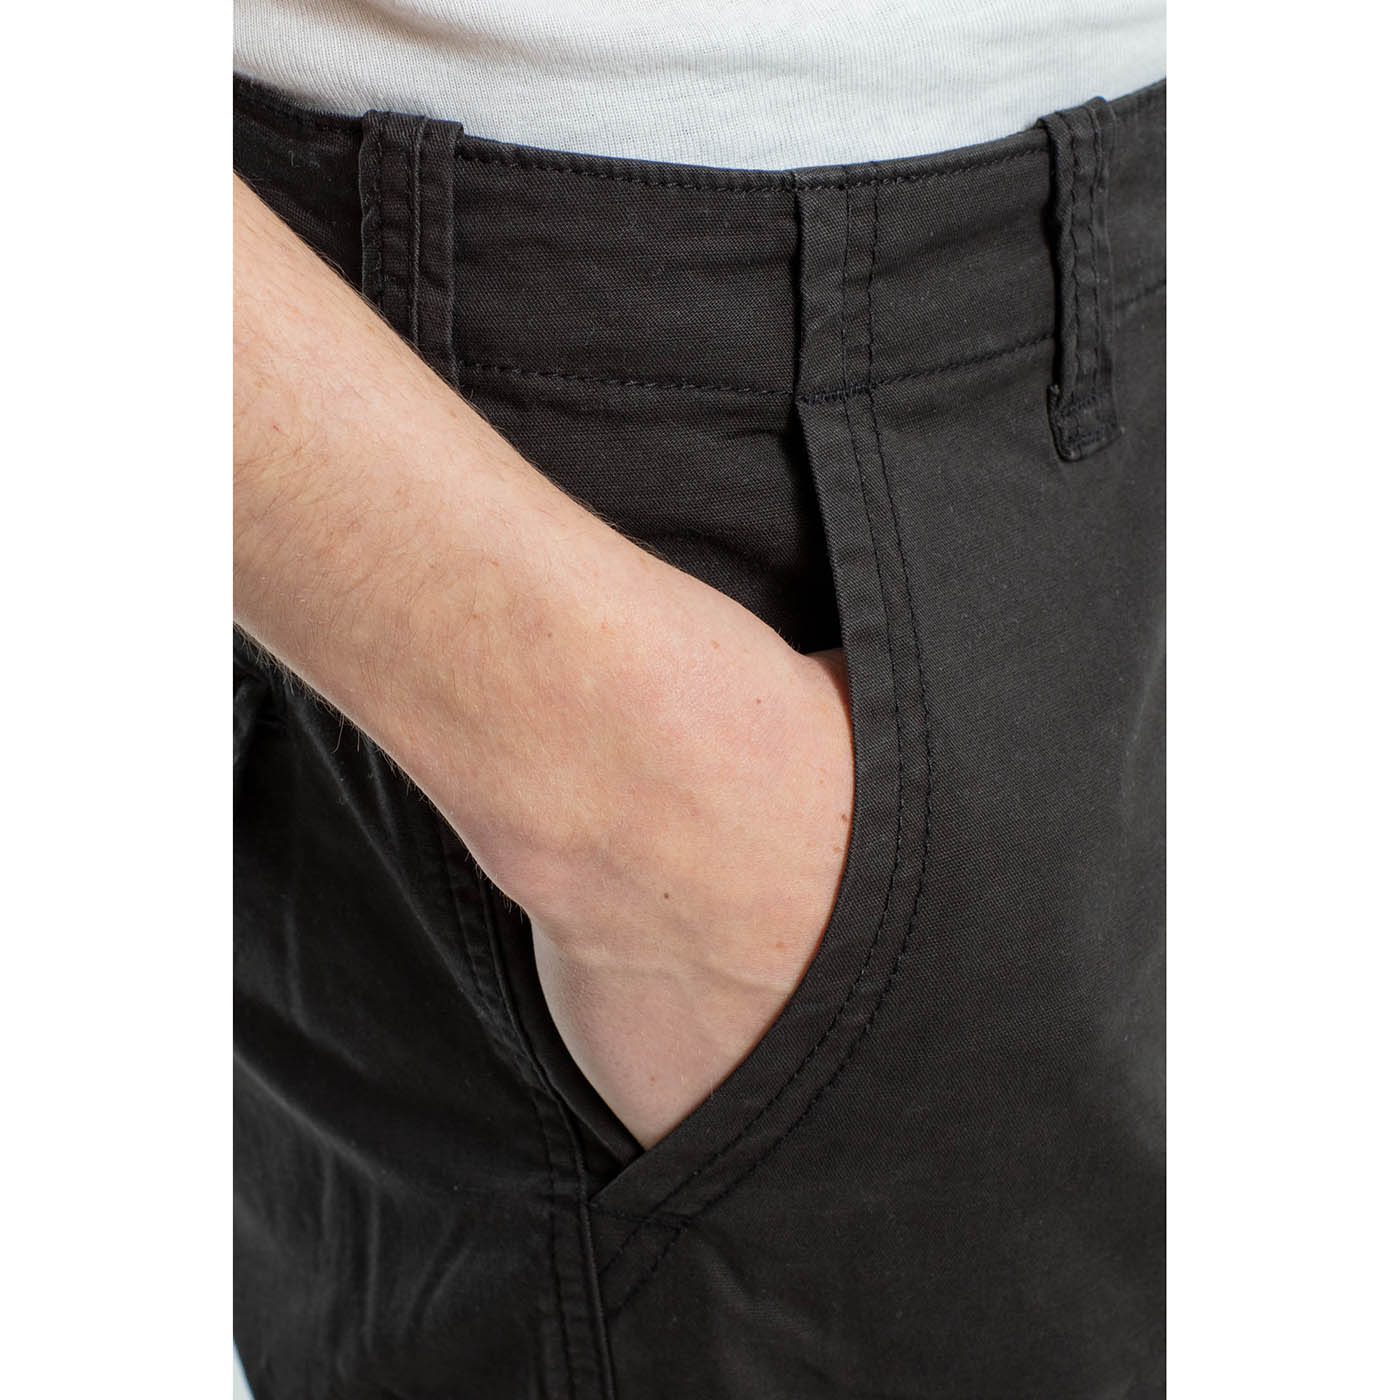 Reell Jeans Flex Cargo LC Pant Black